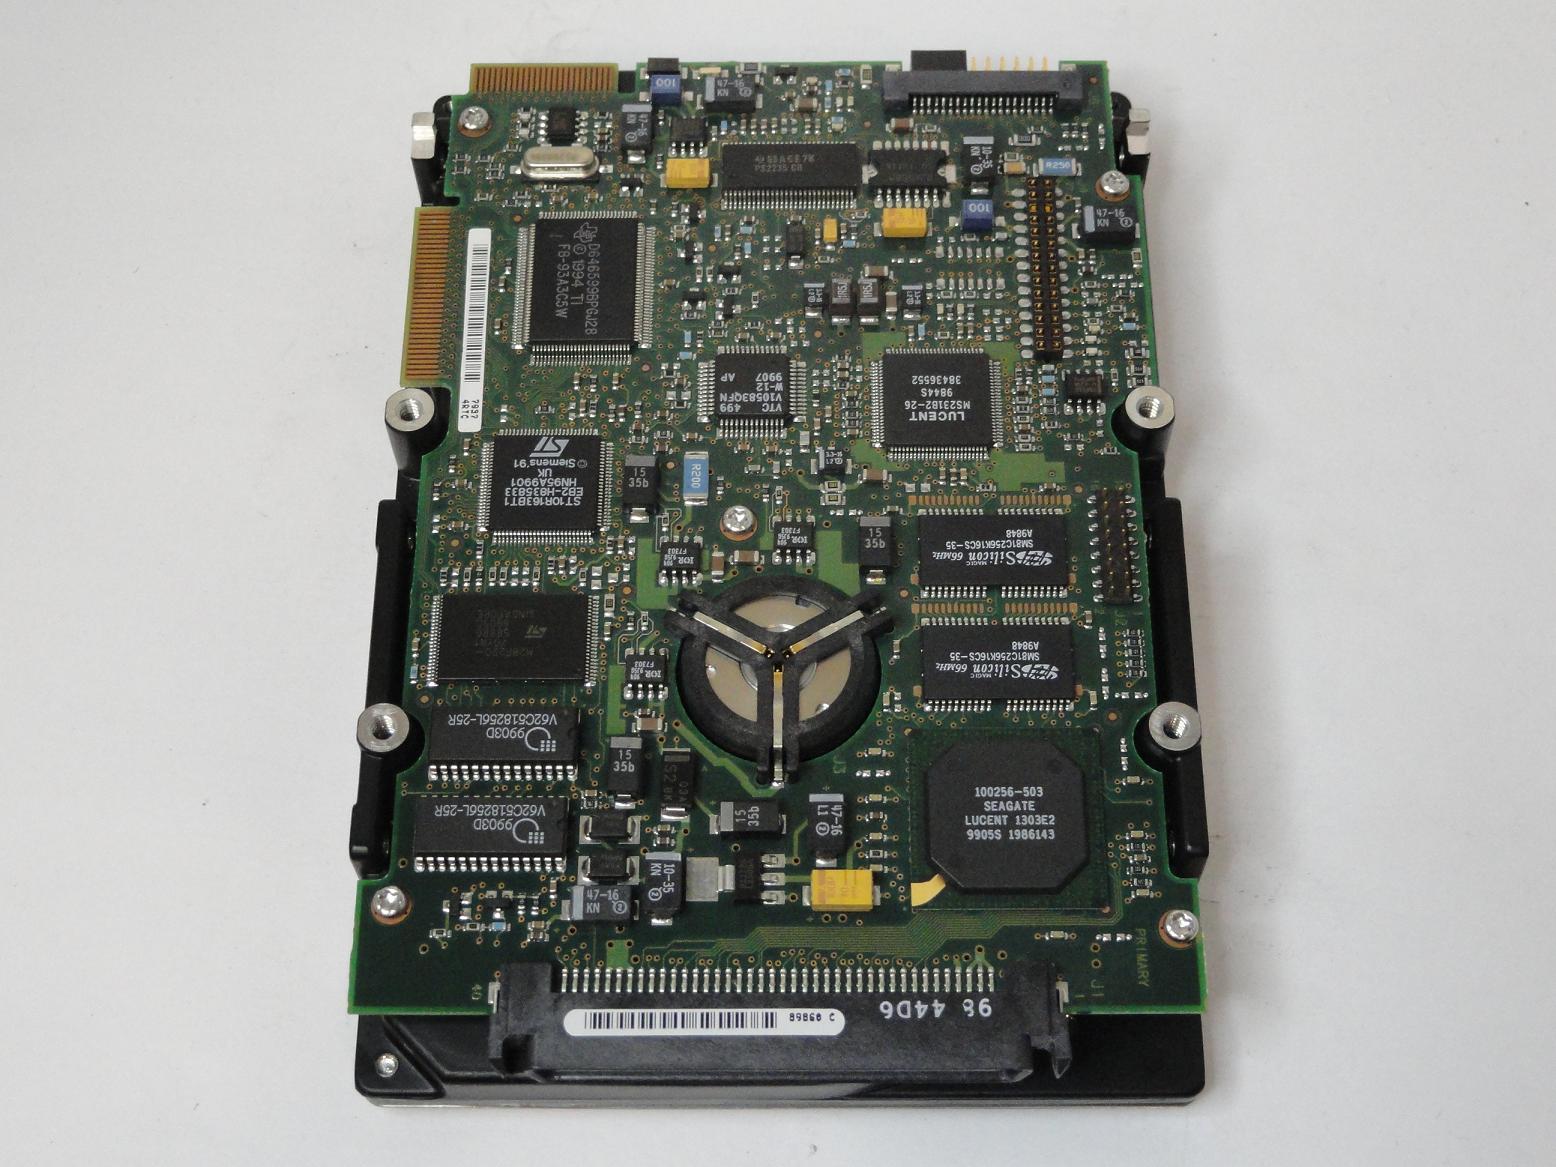 MC2226_9L6001-036_Compaq 9GB SCSI 80 Pin 3.5in HDD - Image2